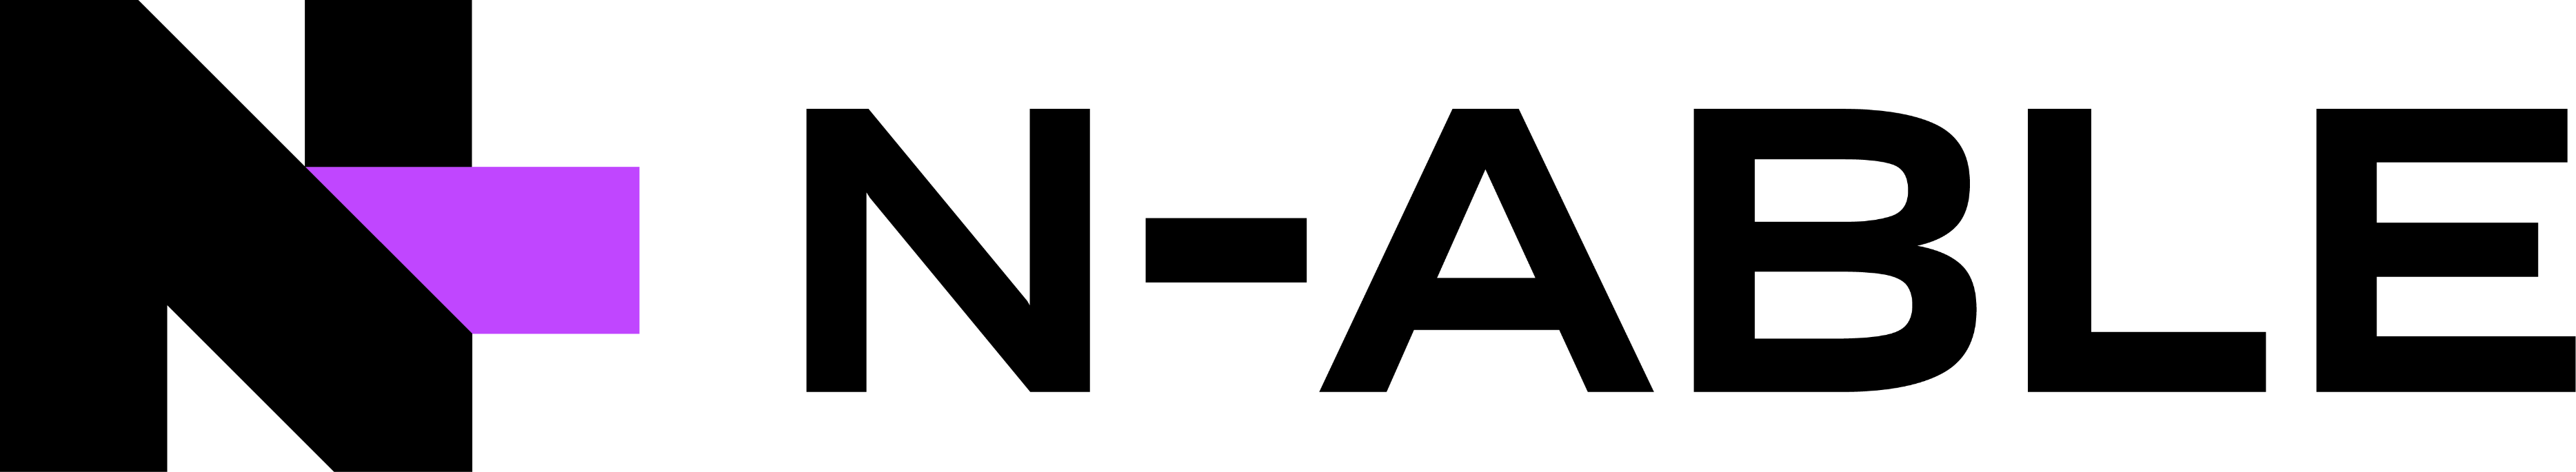 N able logo horizontal full color dark rgb